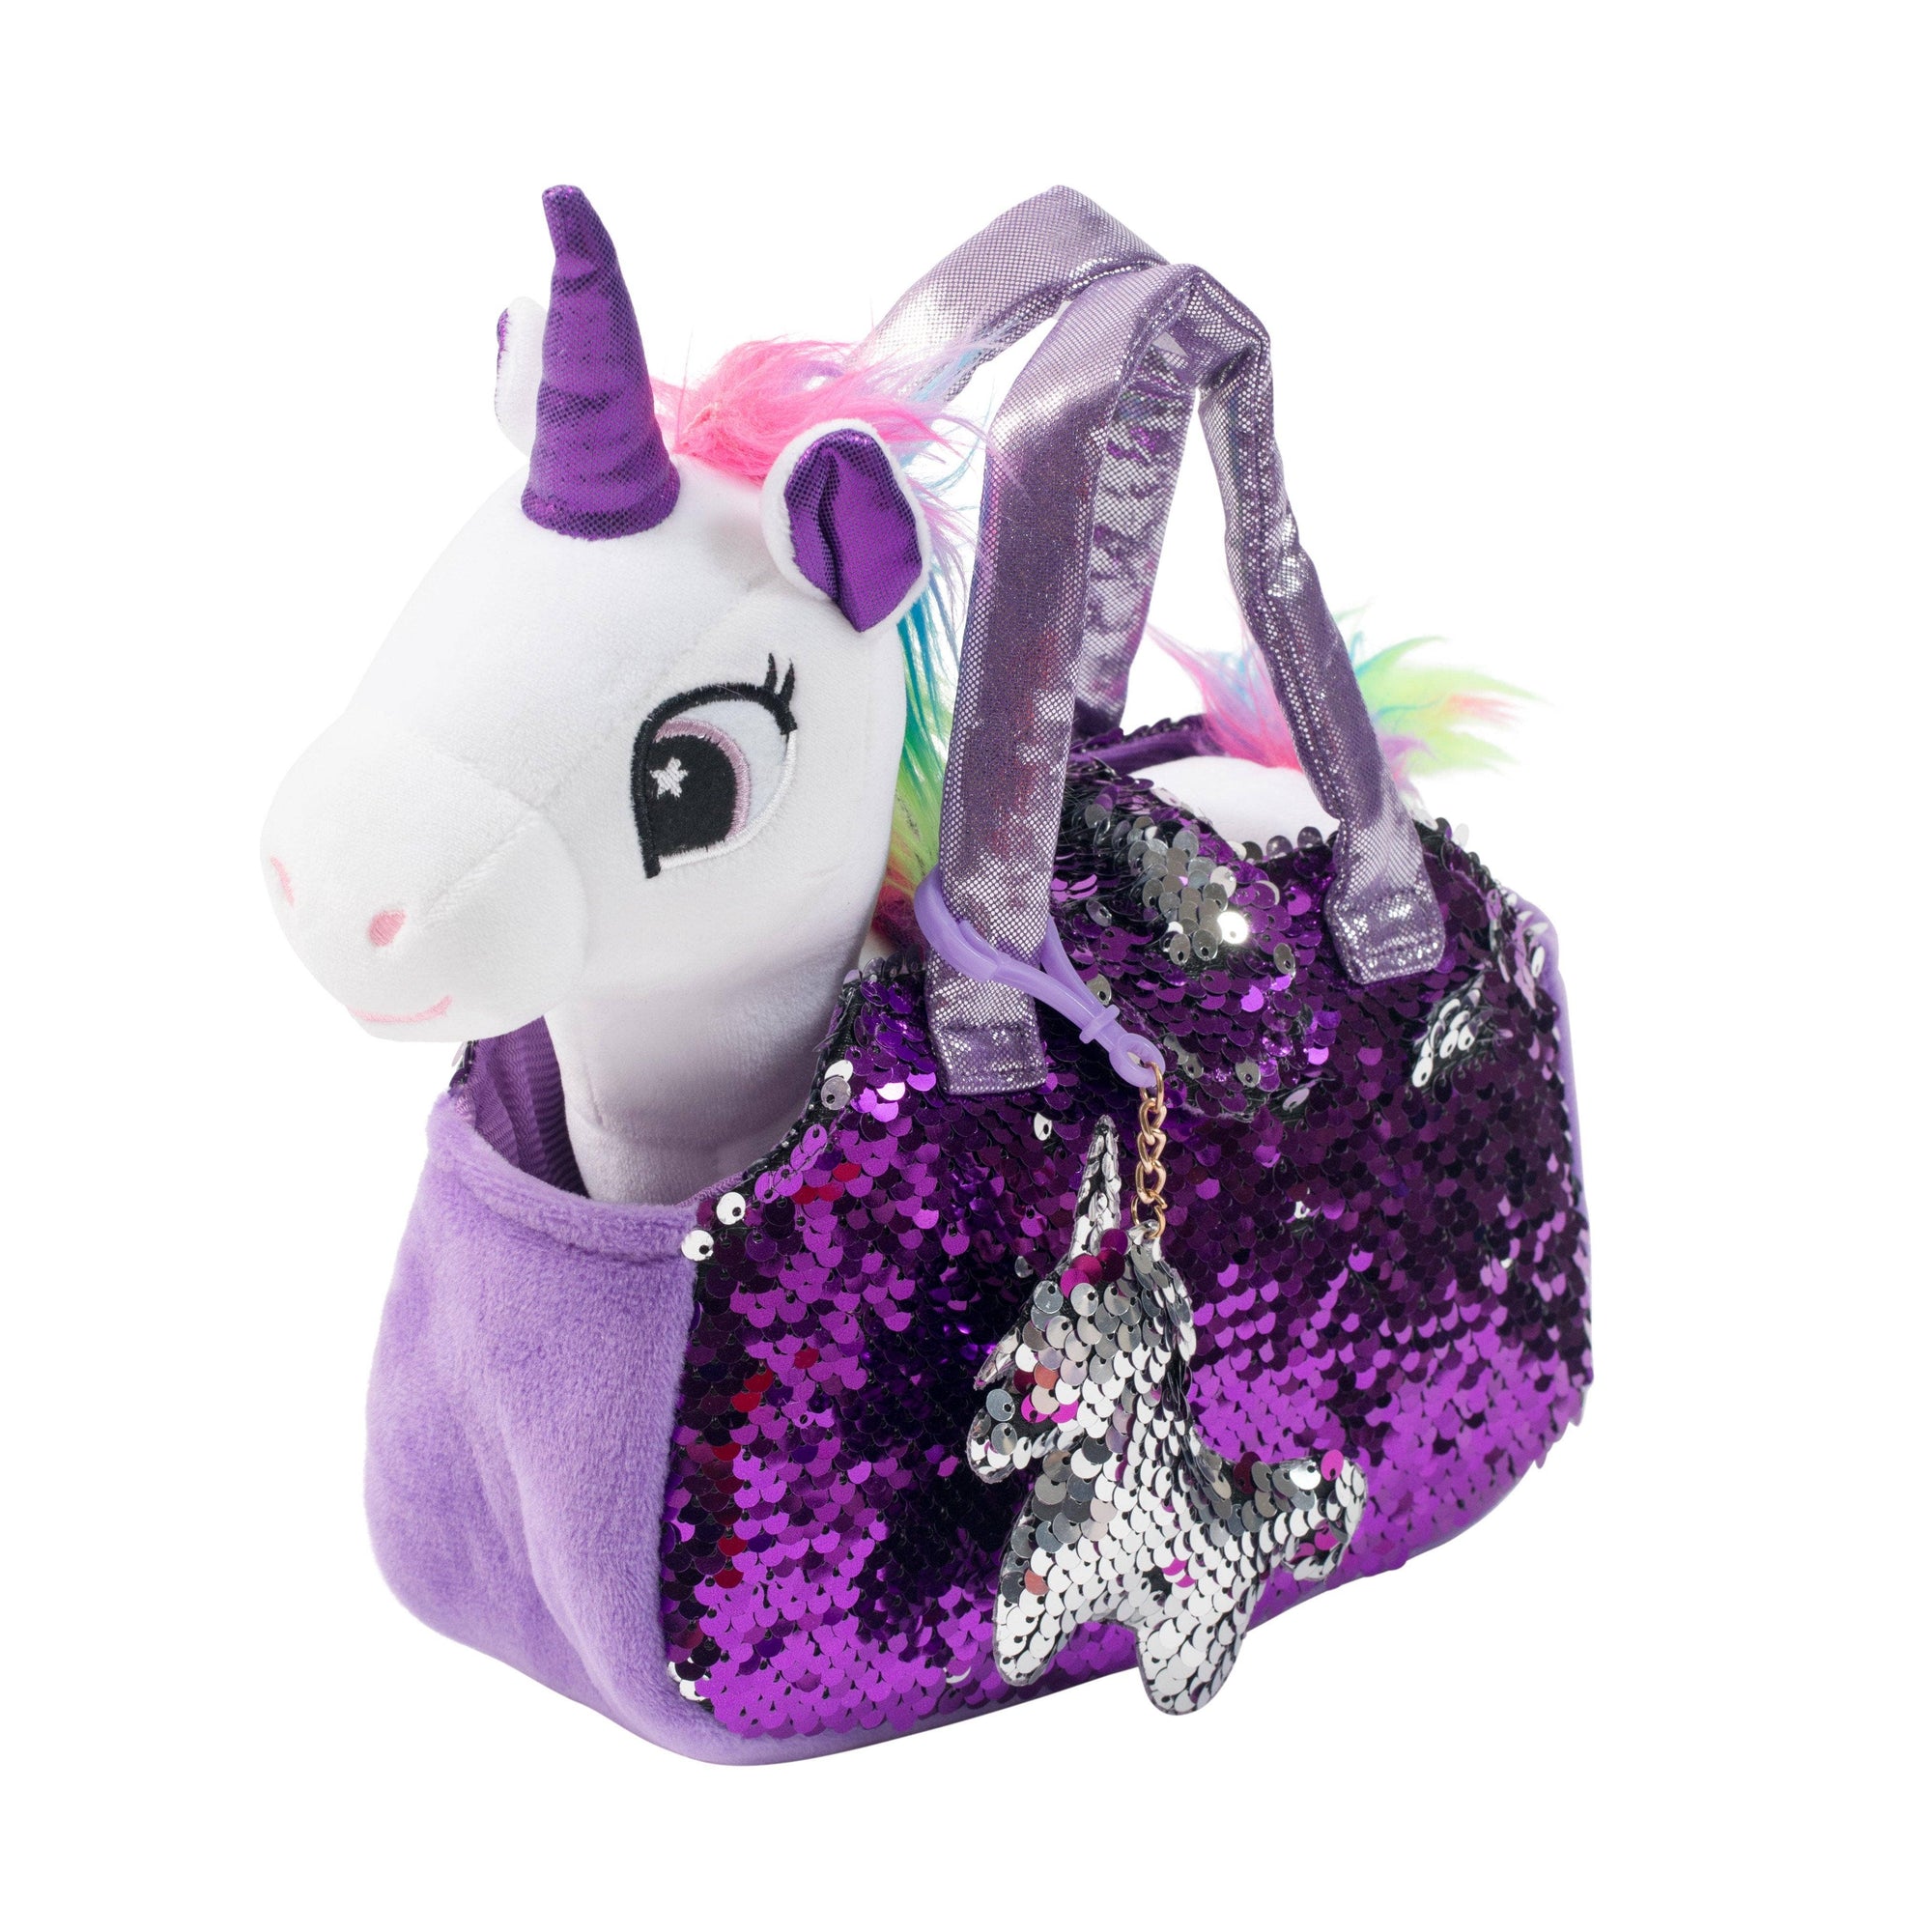 Little Jupiter Pet Plush Set with Bag - White/Purple Unicorn